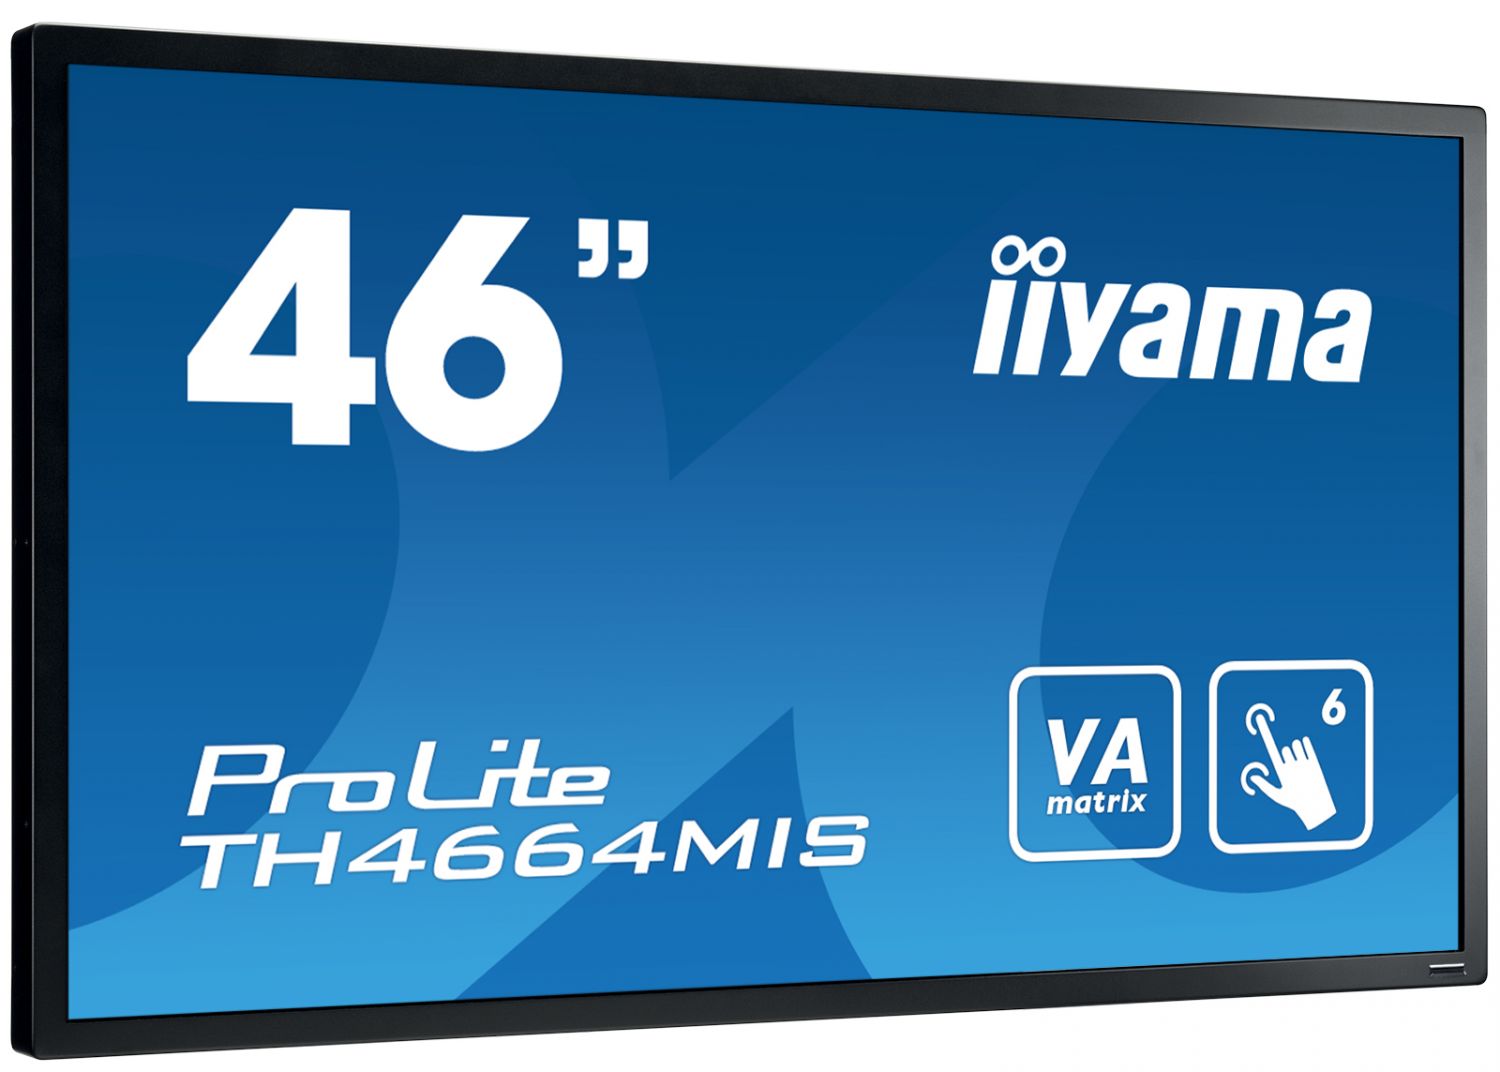 Iiyama Touchscreen-Monitor mit 46 Zoll – Hartware